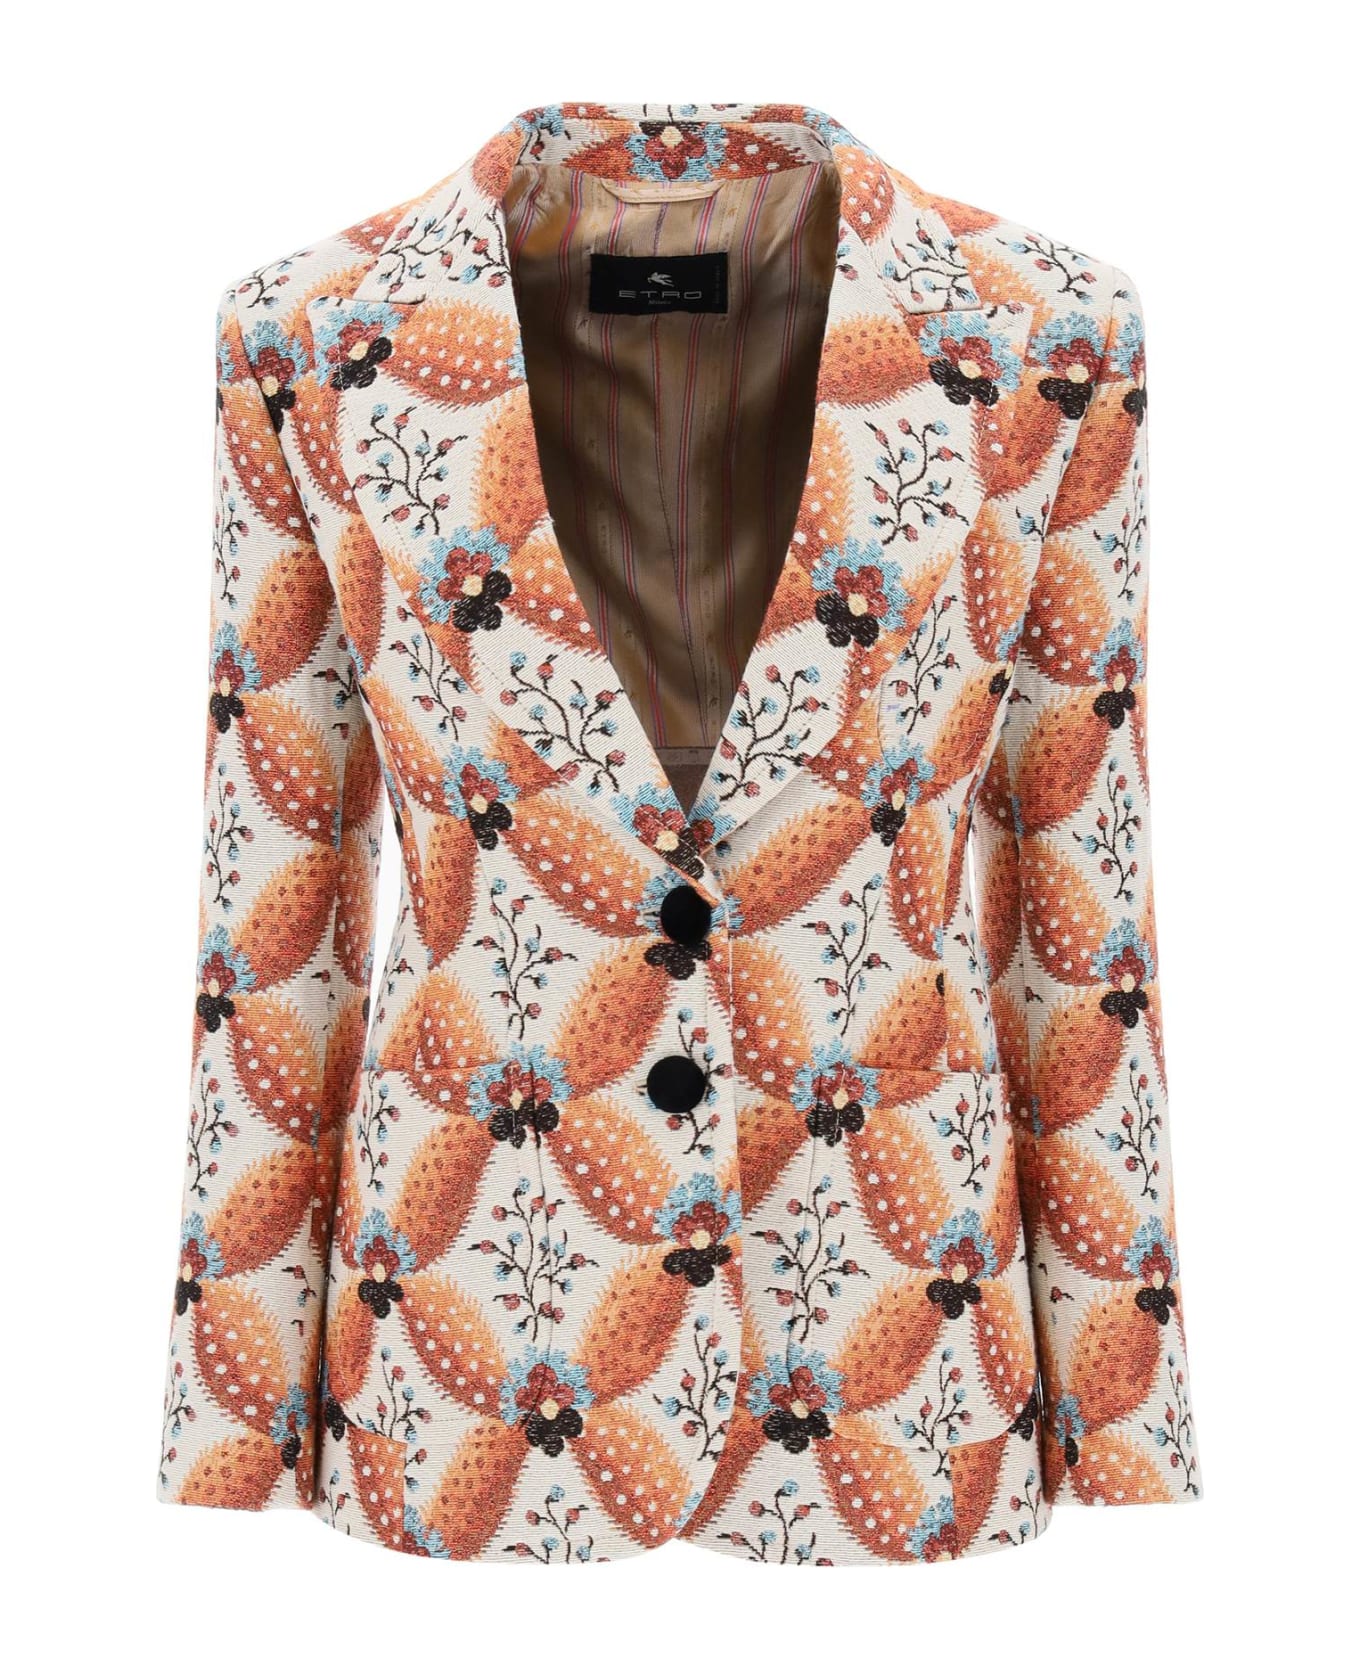 Etro Jacquard Jacket With Floral Motif - ORANGE (Beige)